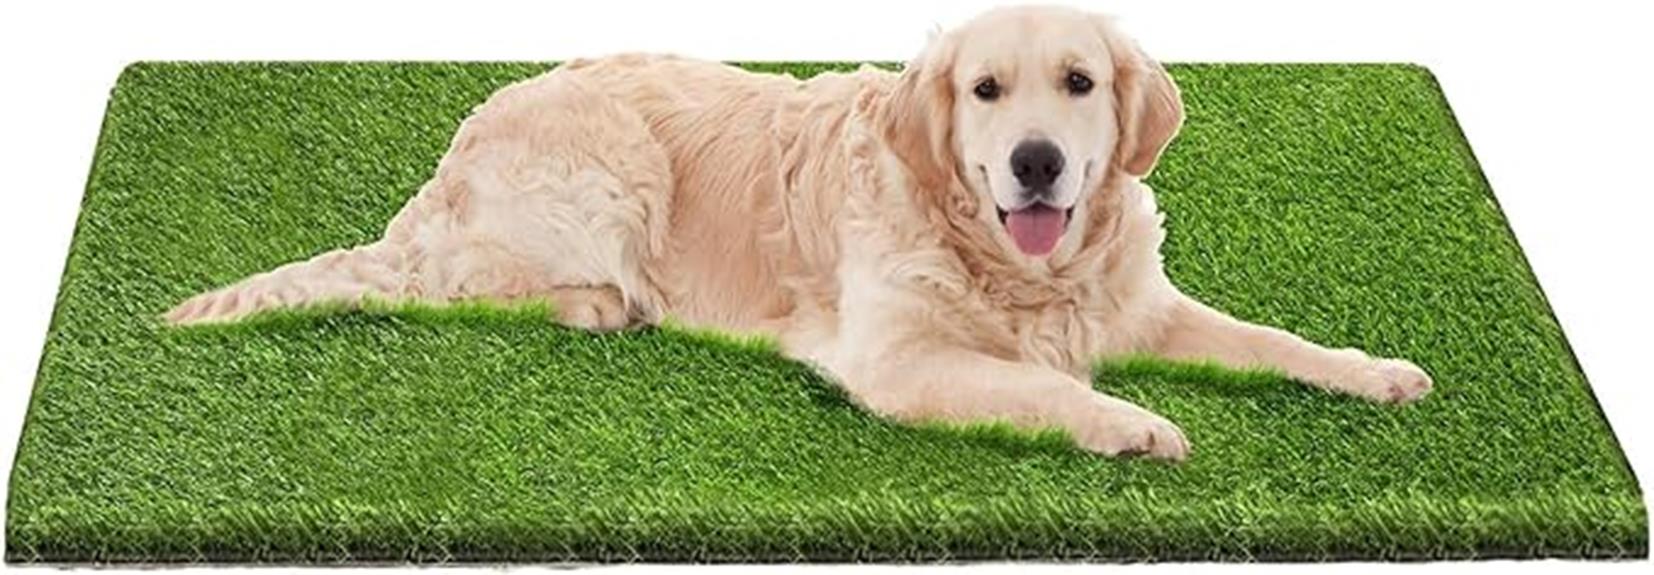 artificial grass dog pee pads